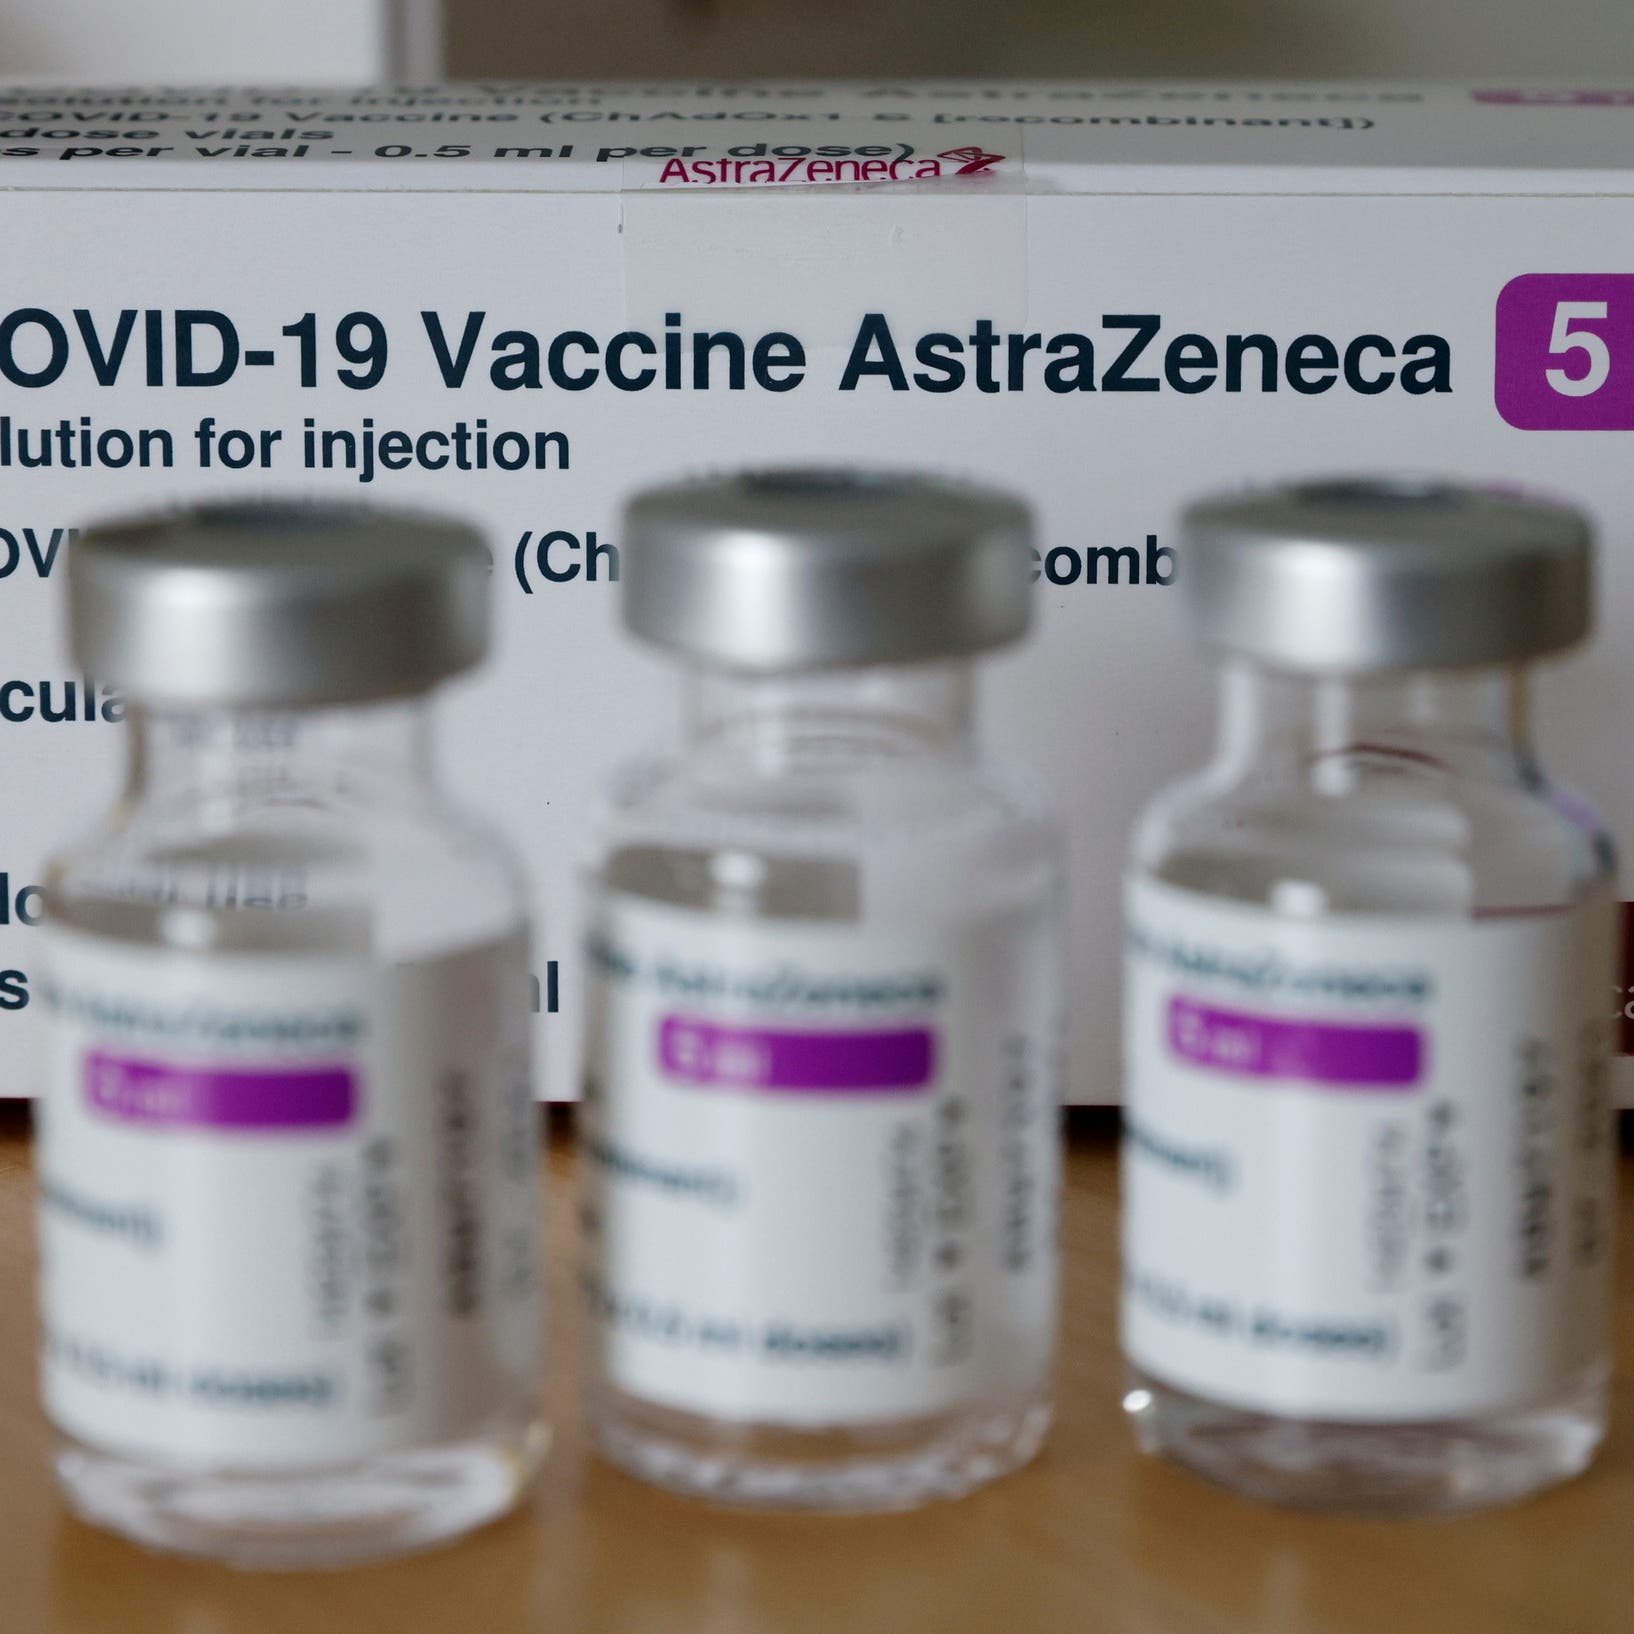 Australia further restricts AstraZeneca COVID-19 vaccine over clotting concerns